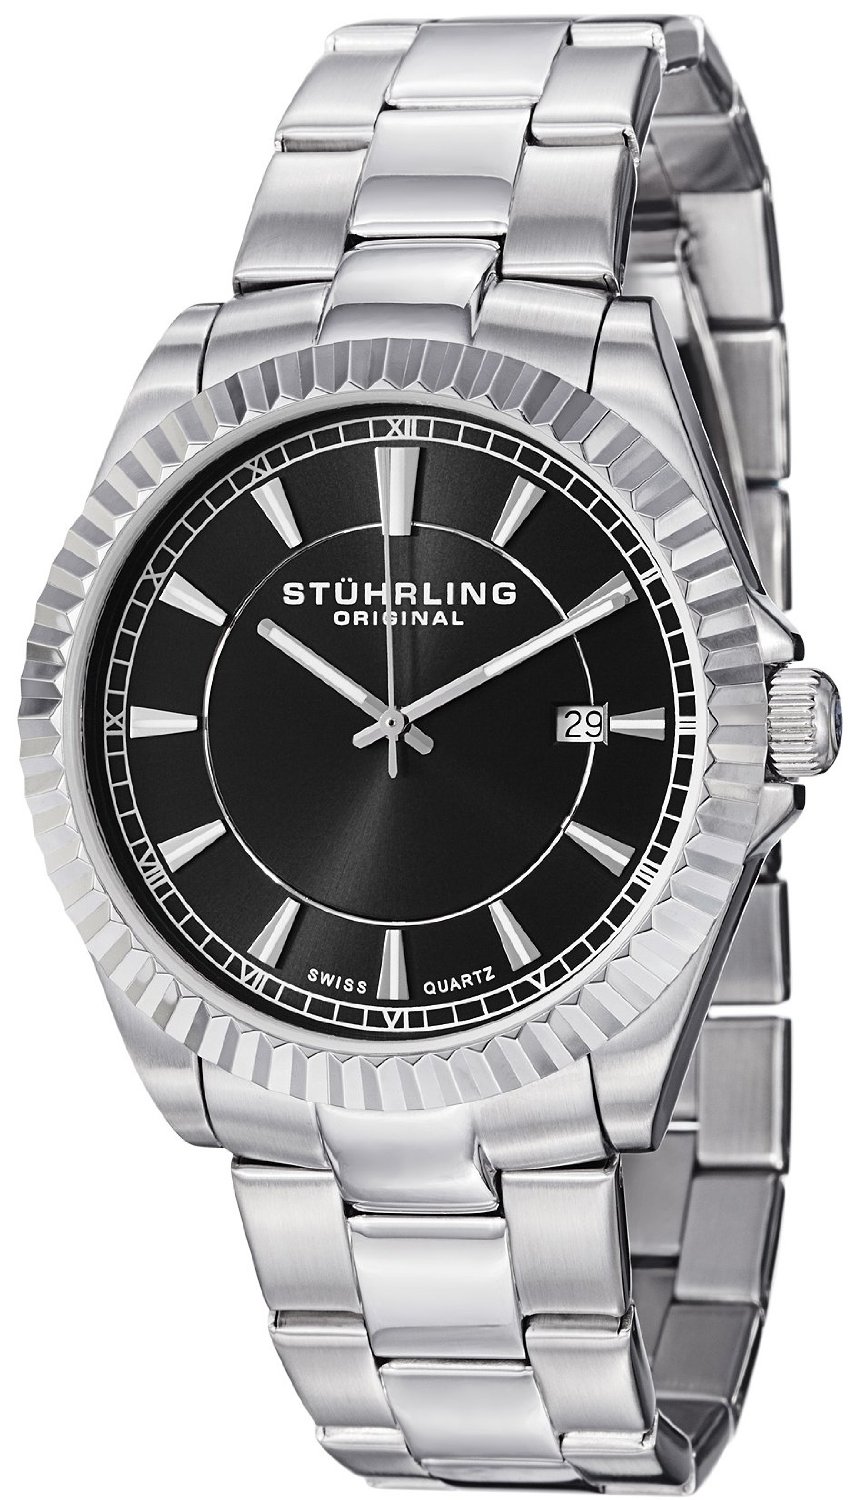 Stuhrling Original Men's and Women's Swiss Quartz Stainless Steel Bracelet Watches for $49.99